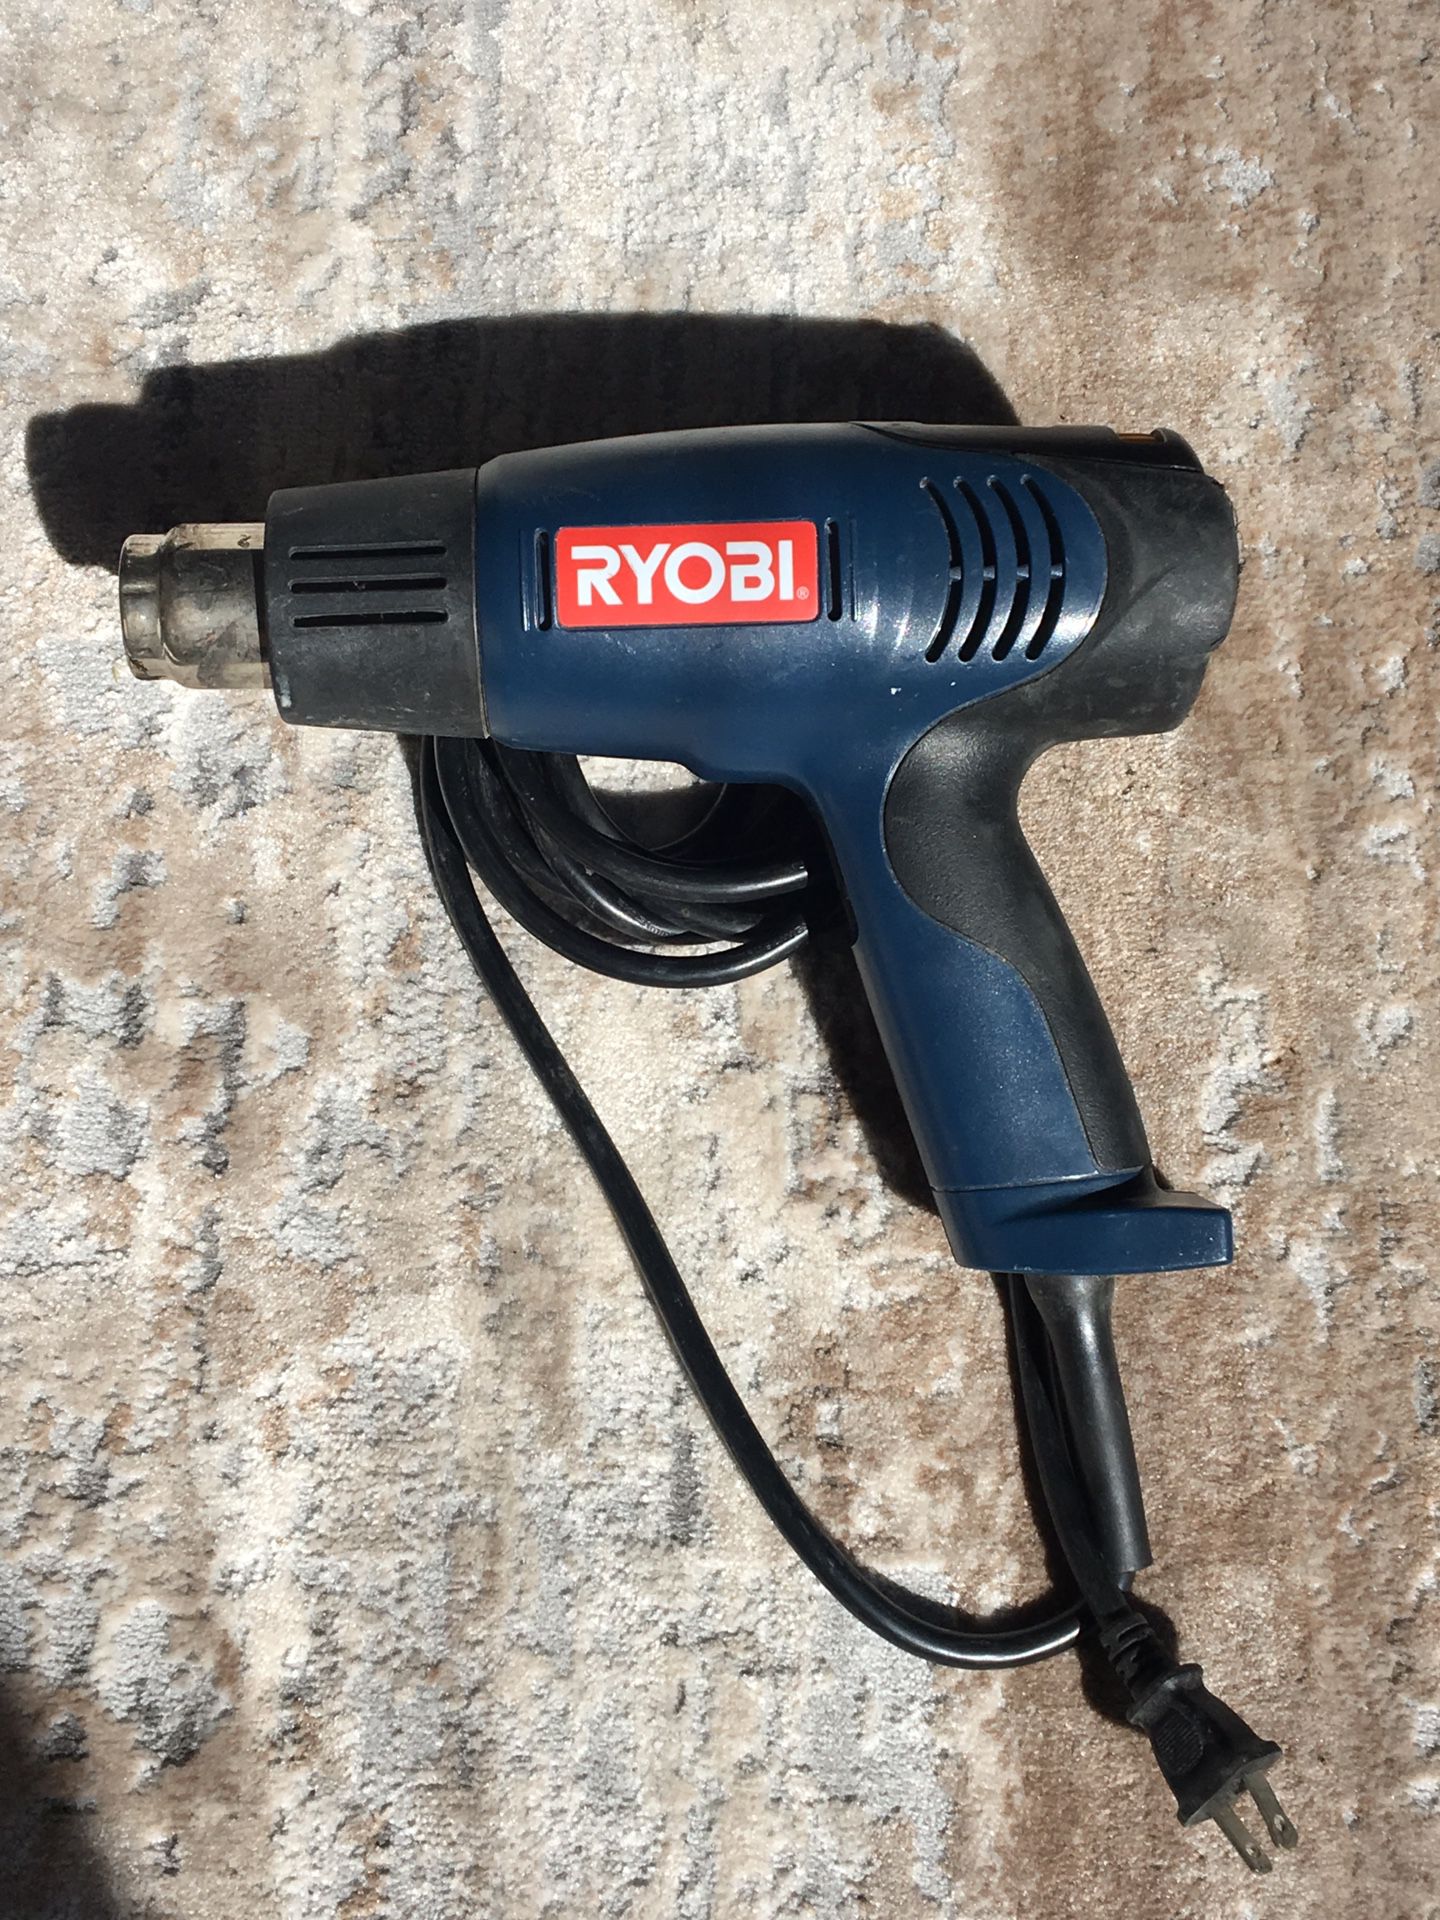 How to use the Ryobi Heat Gun. 